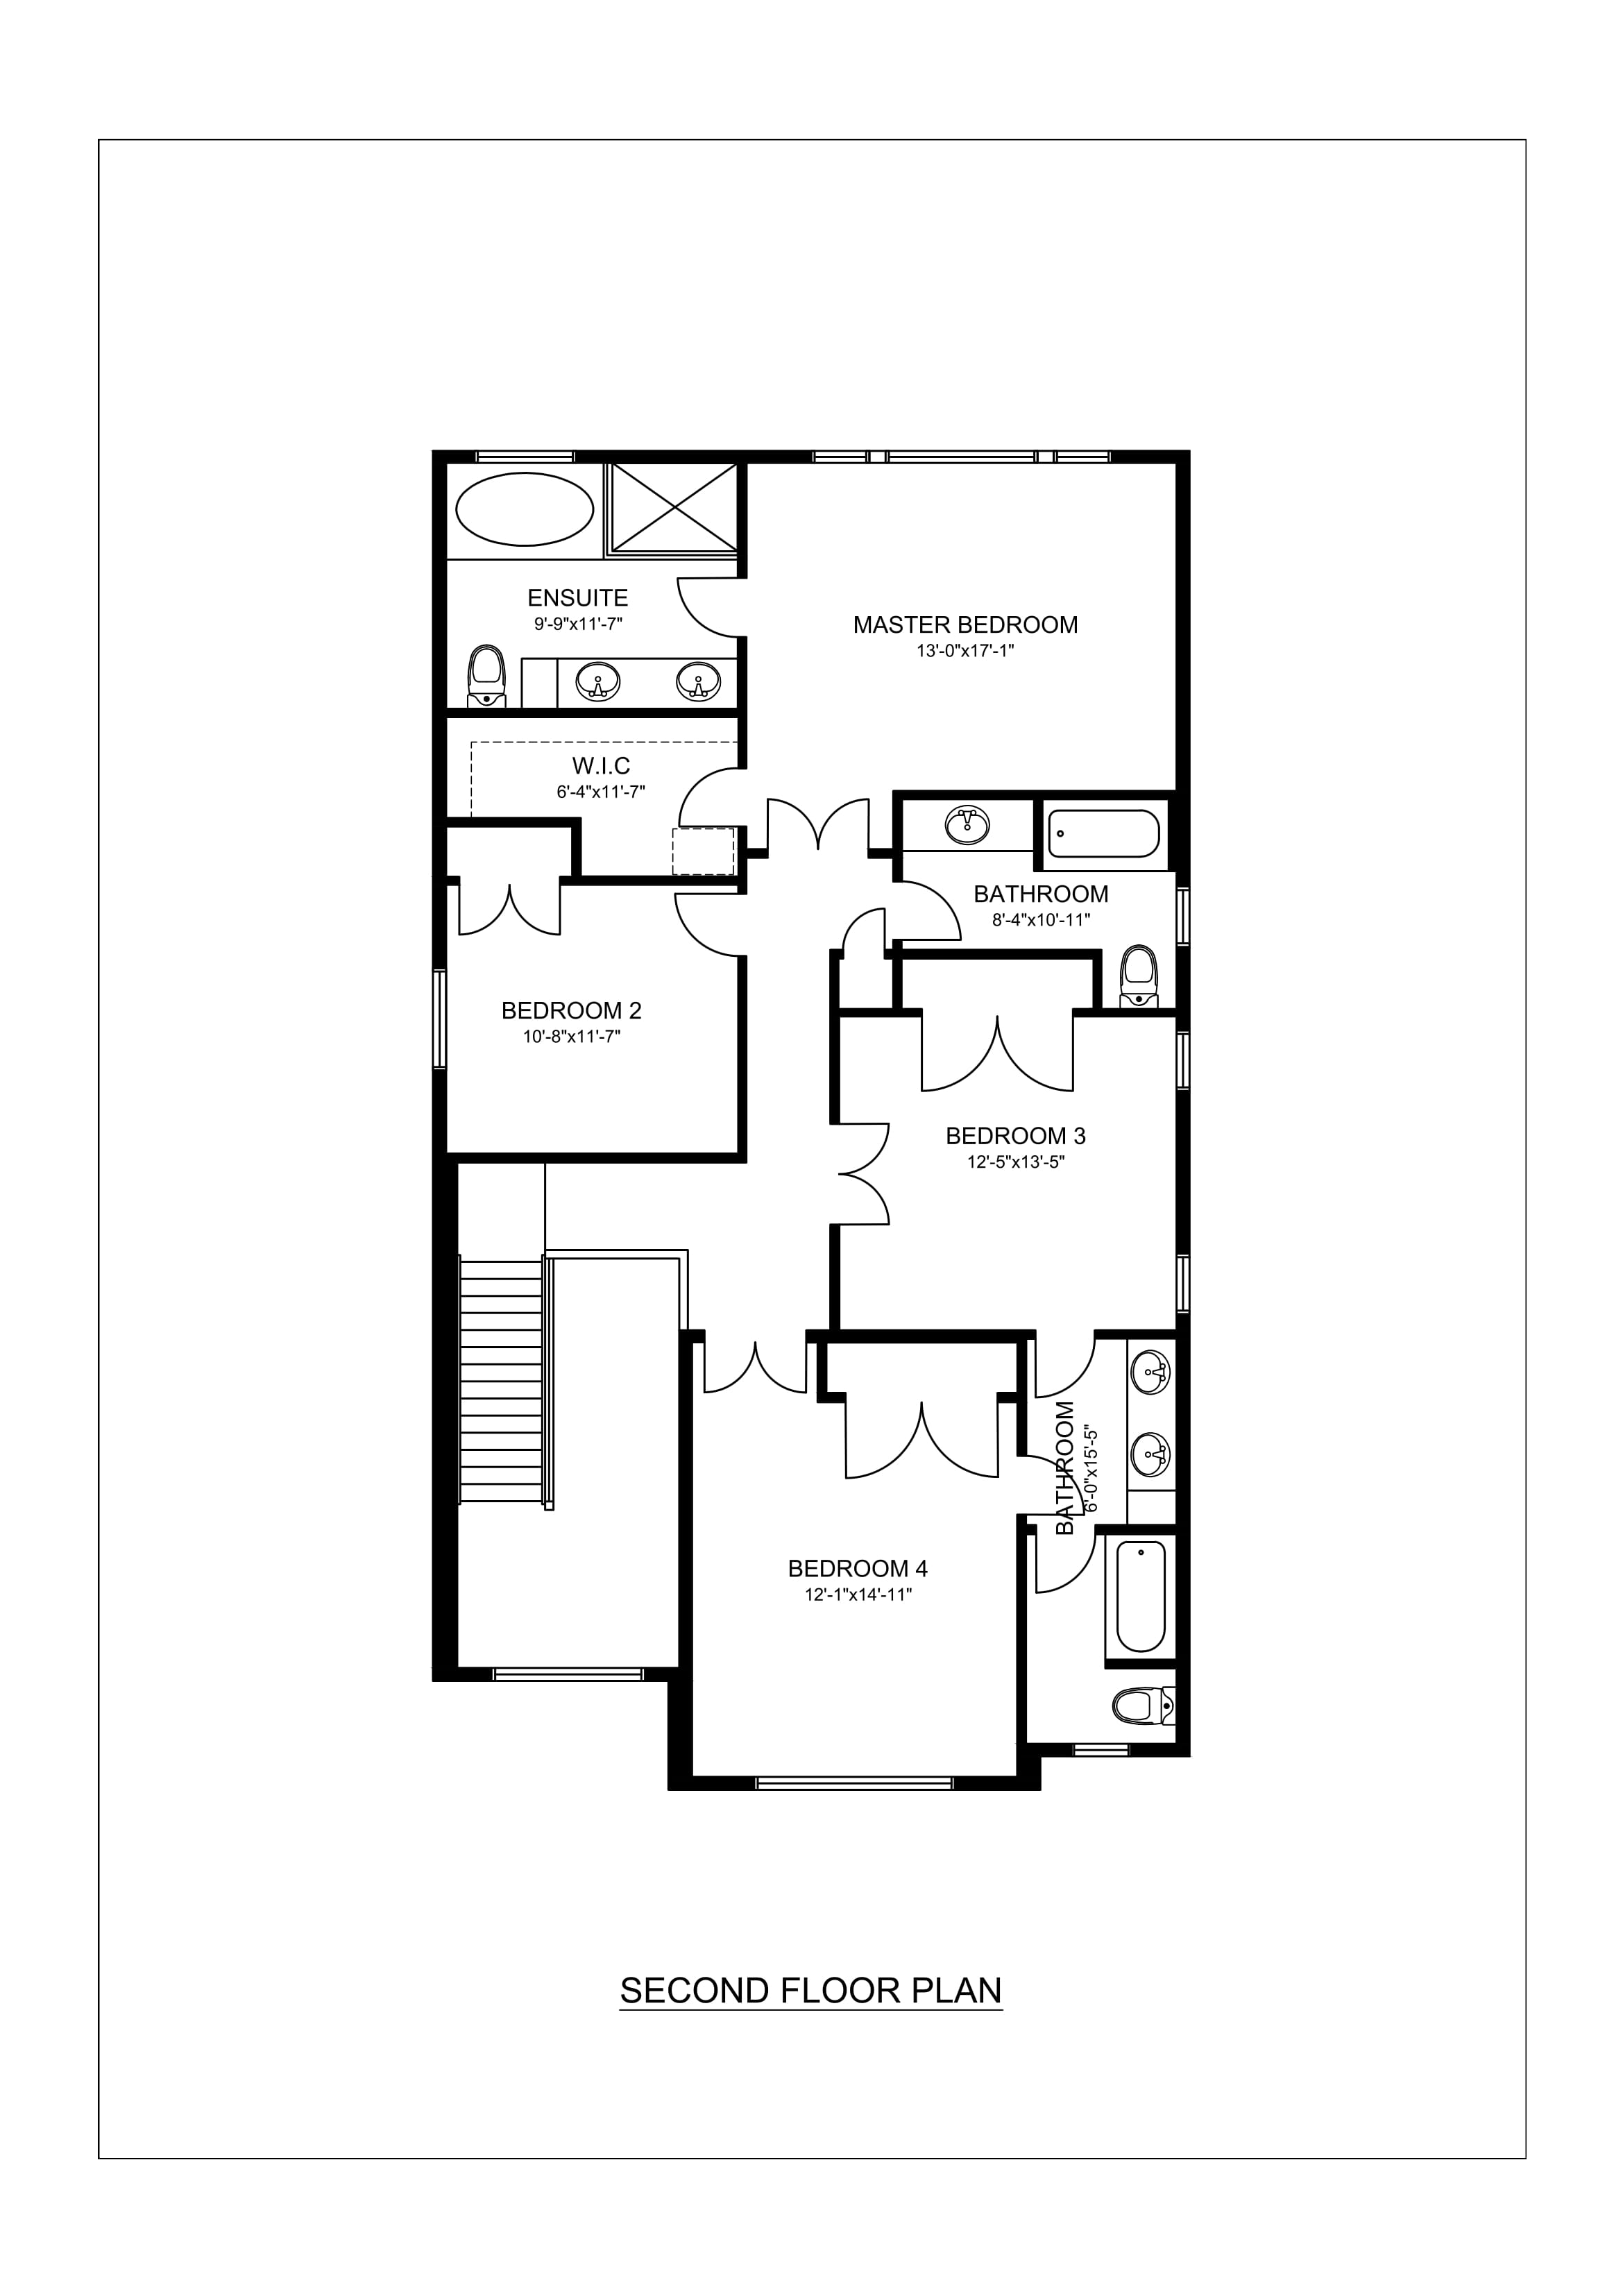 2D Floor Plan - Design / Rendering - Samples / Examples ...